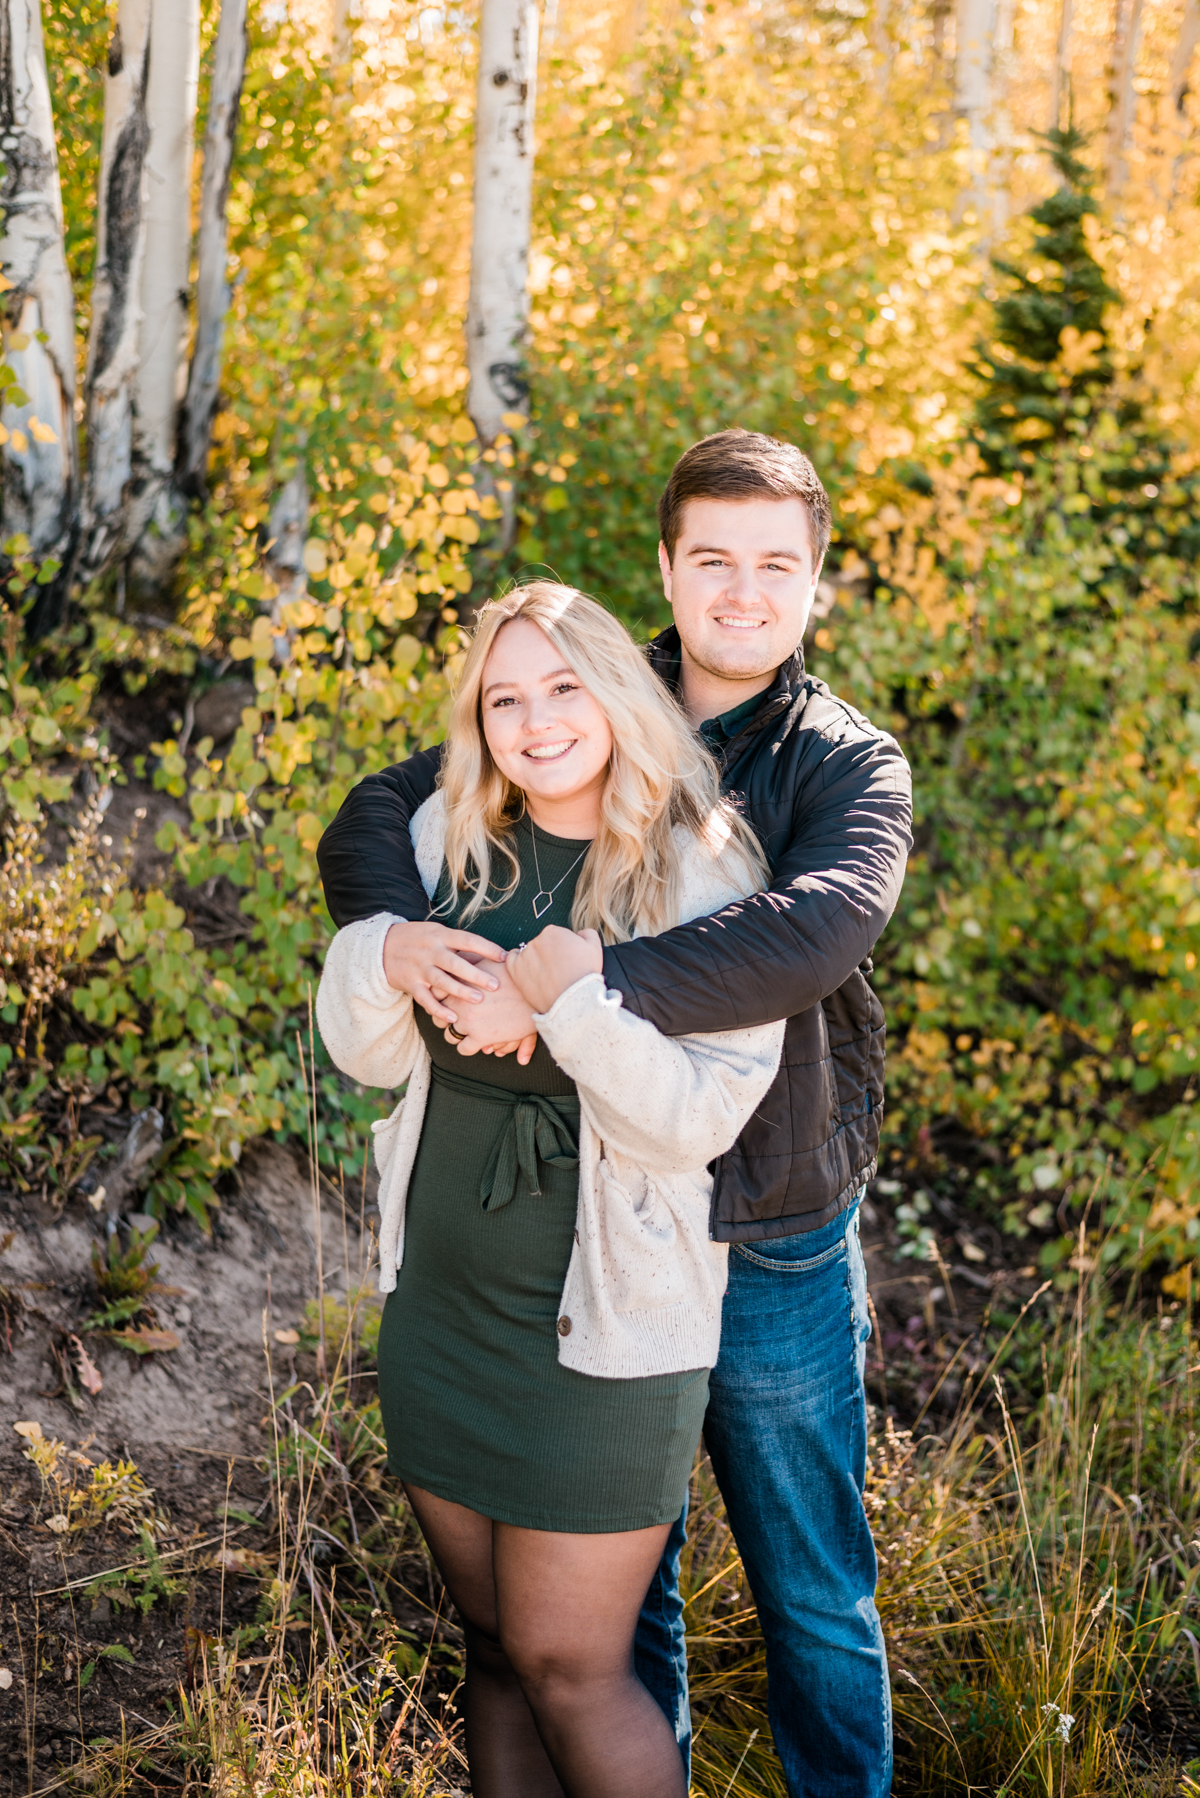 Danielle & Brendan | Fall Engagement Photos on the Grand Mesa